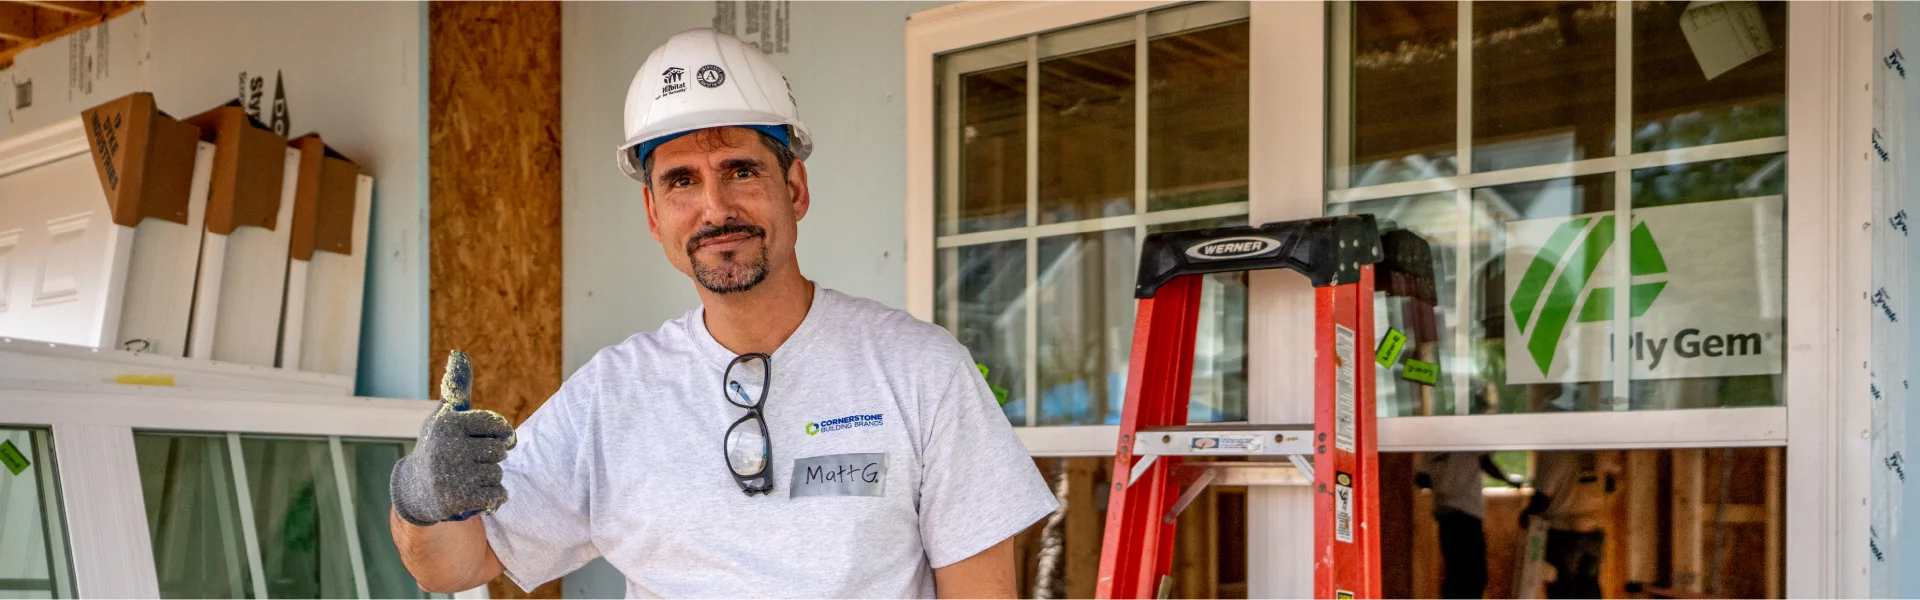 Social Hero Thumbs Up Construction Man